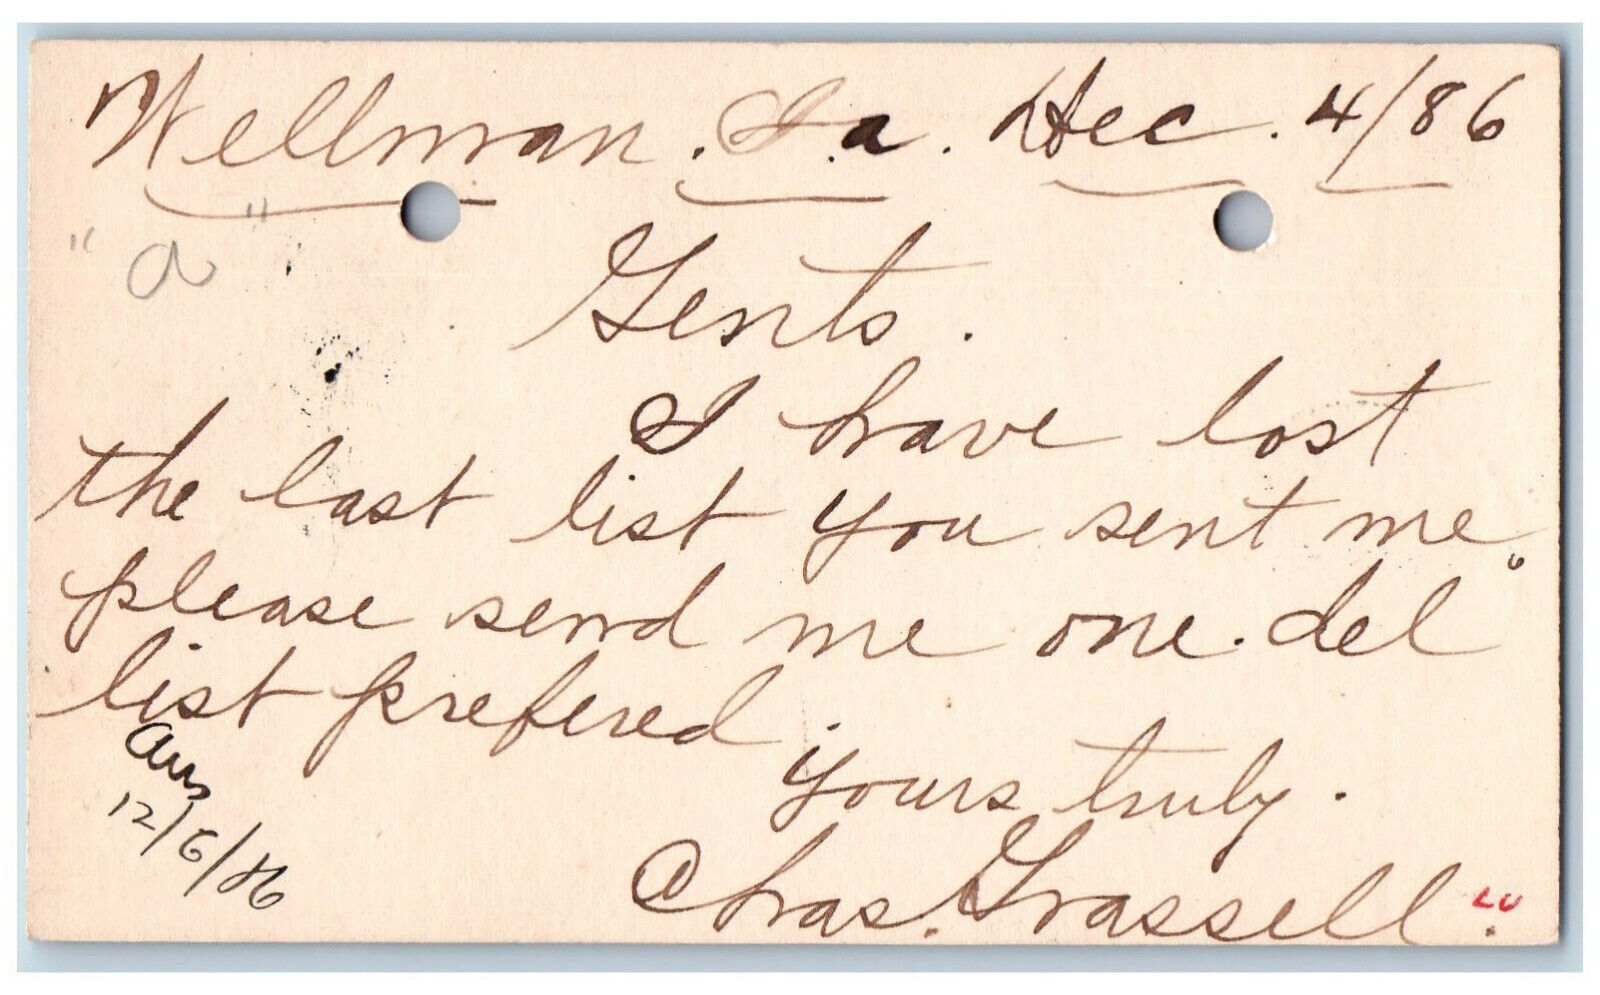 Wellman Iowa IA Clinton IA Postal Card Lost the Last List Message WJ Young 1886